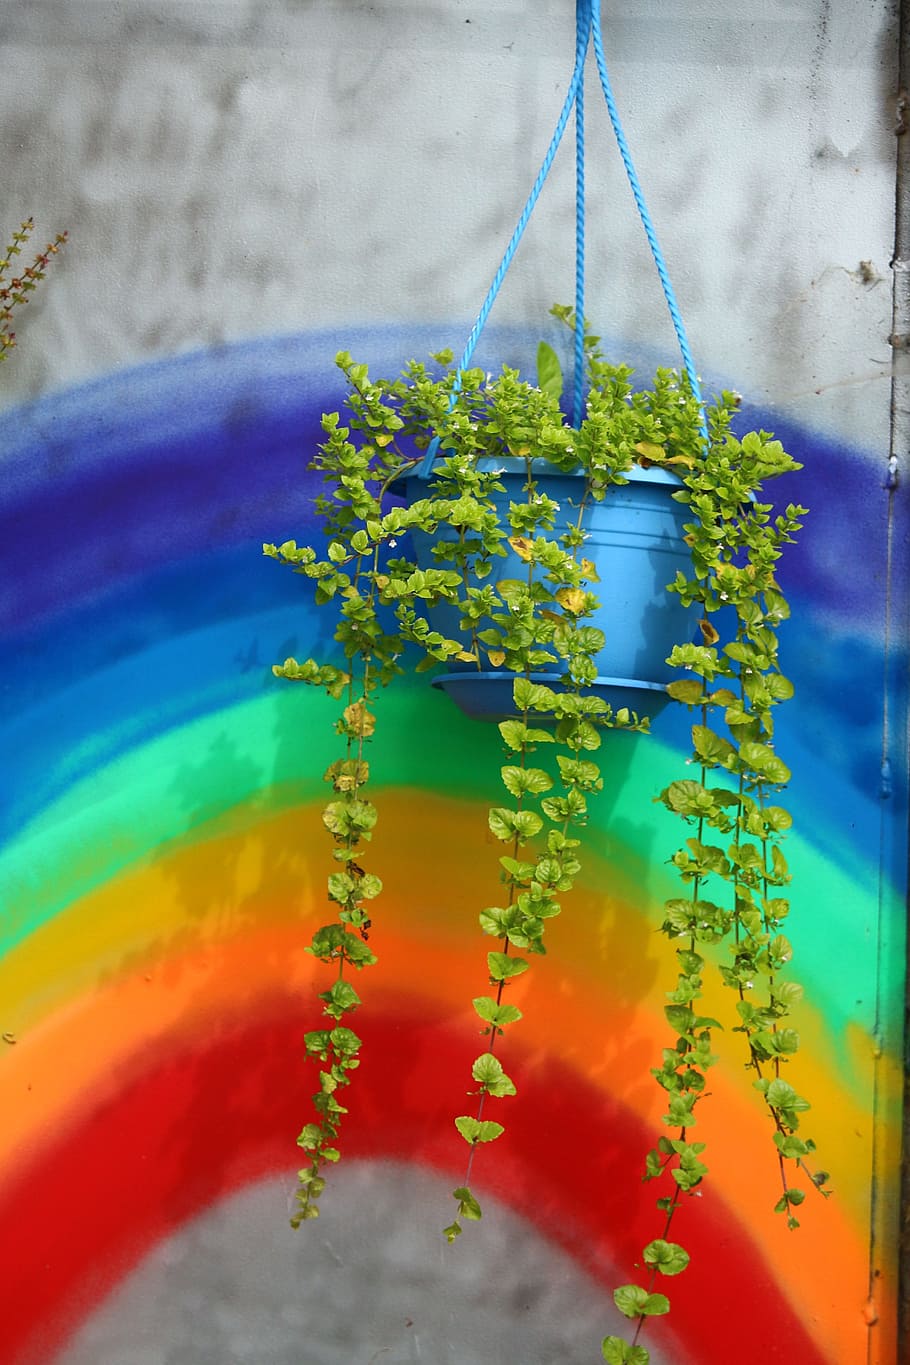 green, leafed, plant, blue, pot, rainbow, hanging plant, mint, hanging mint, medicinal herb